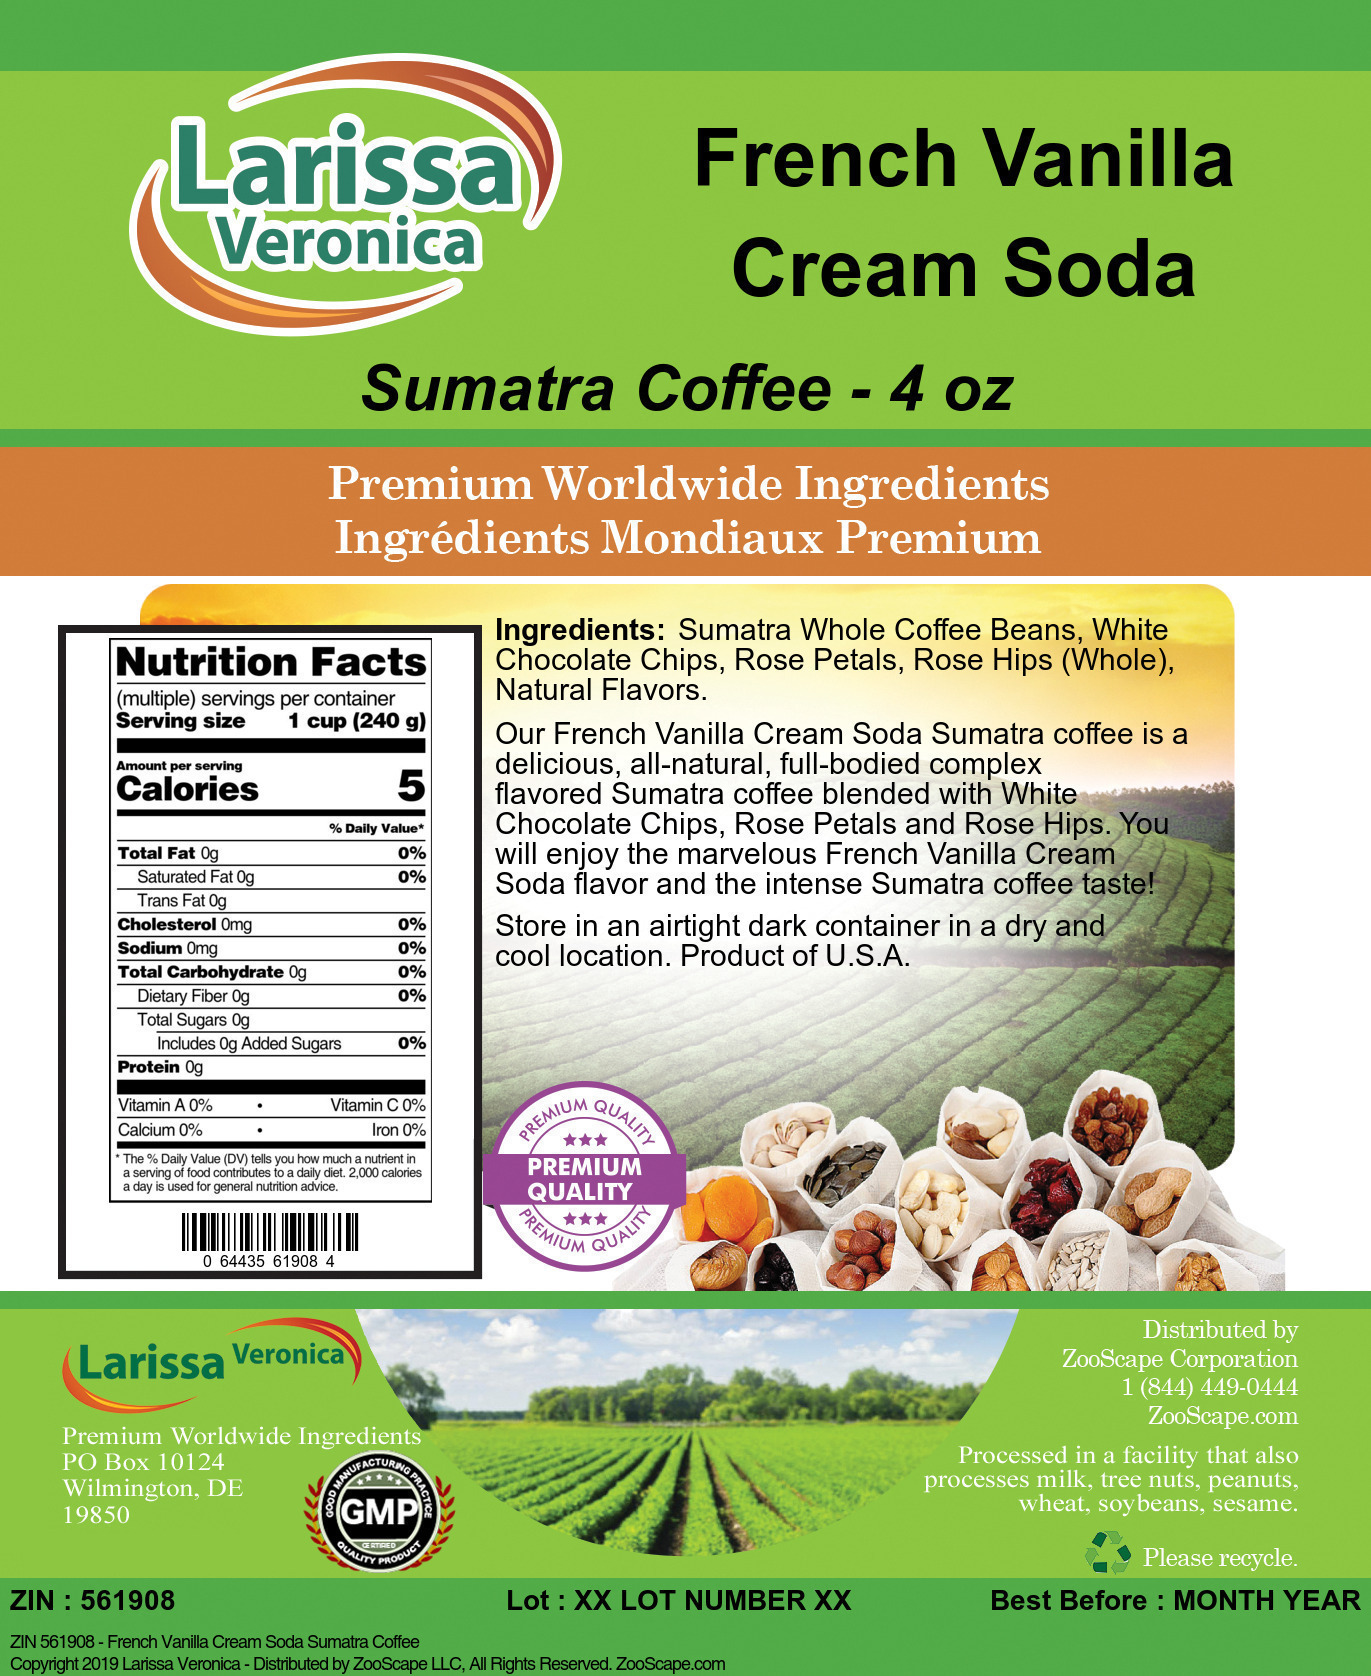 French Vanilla Cream Soda Sumatra Coffee - Label